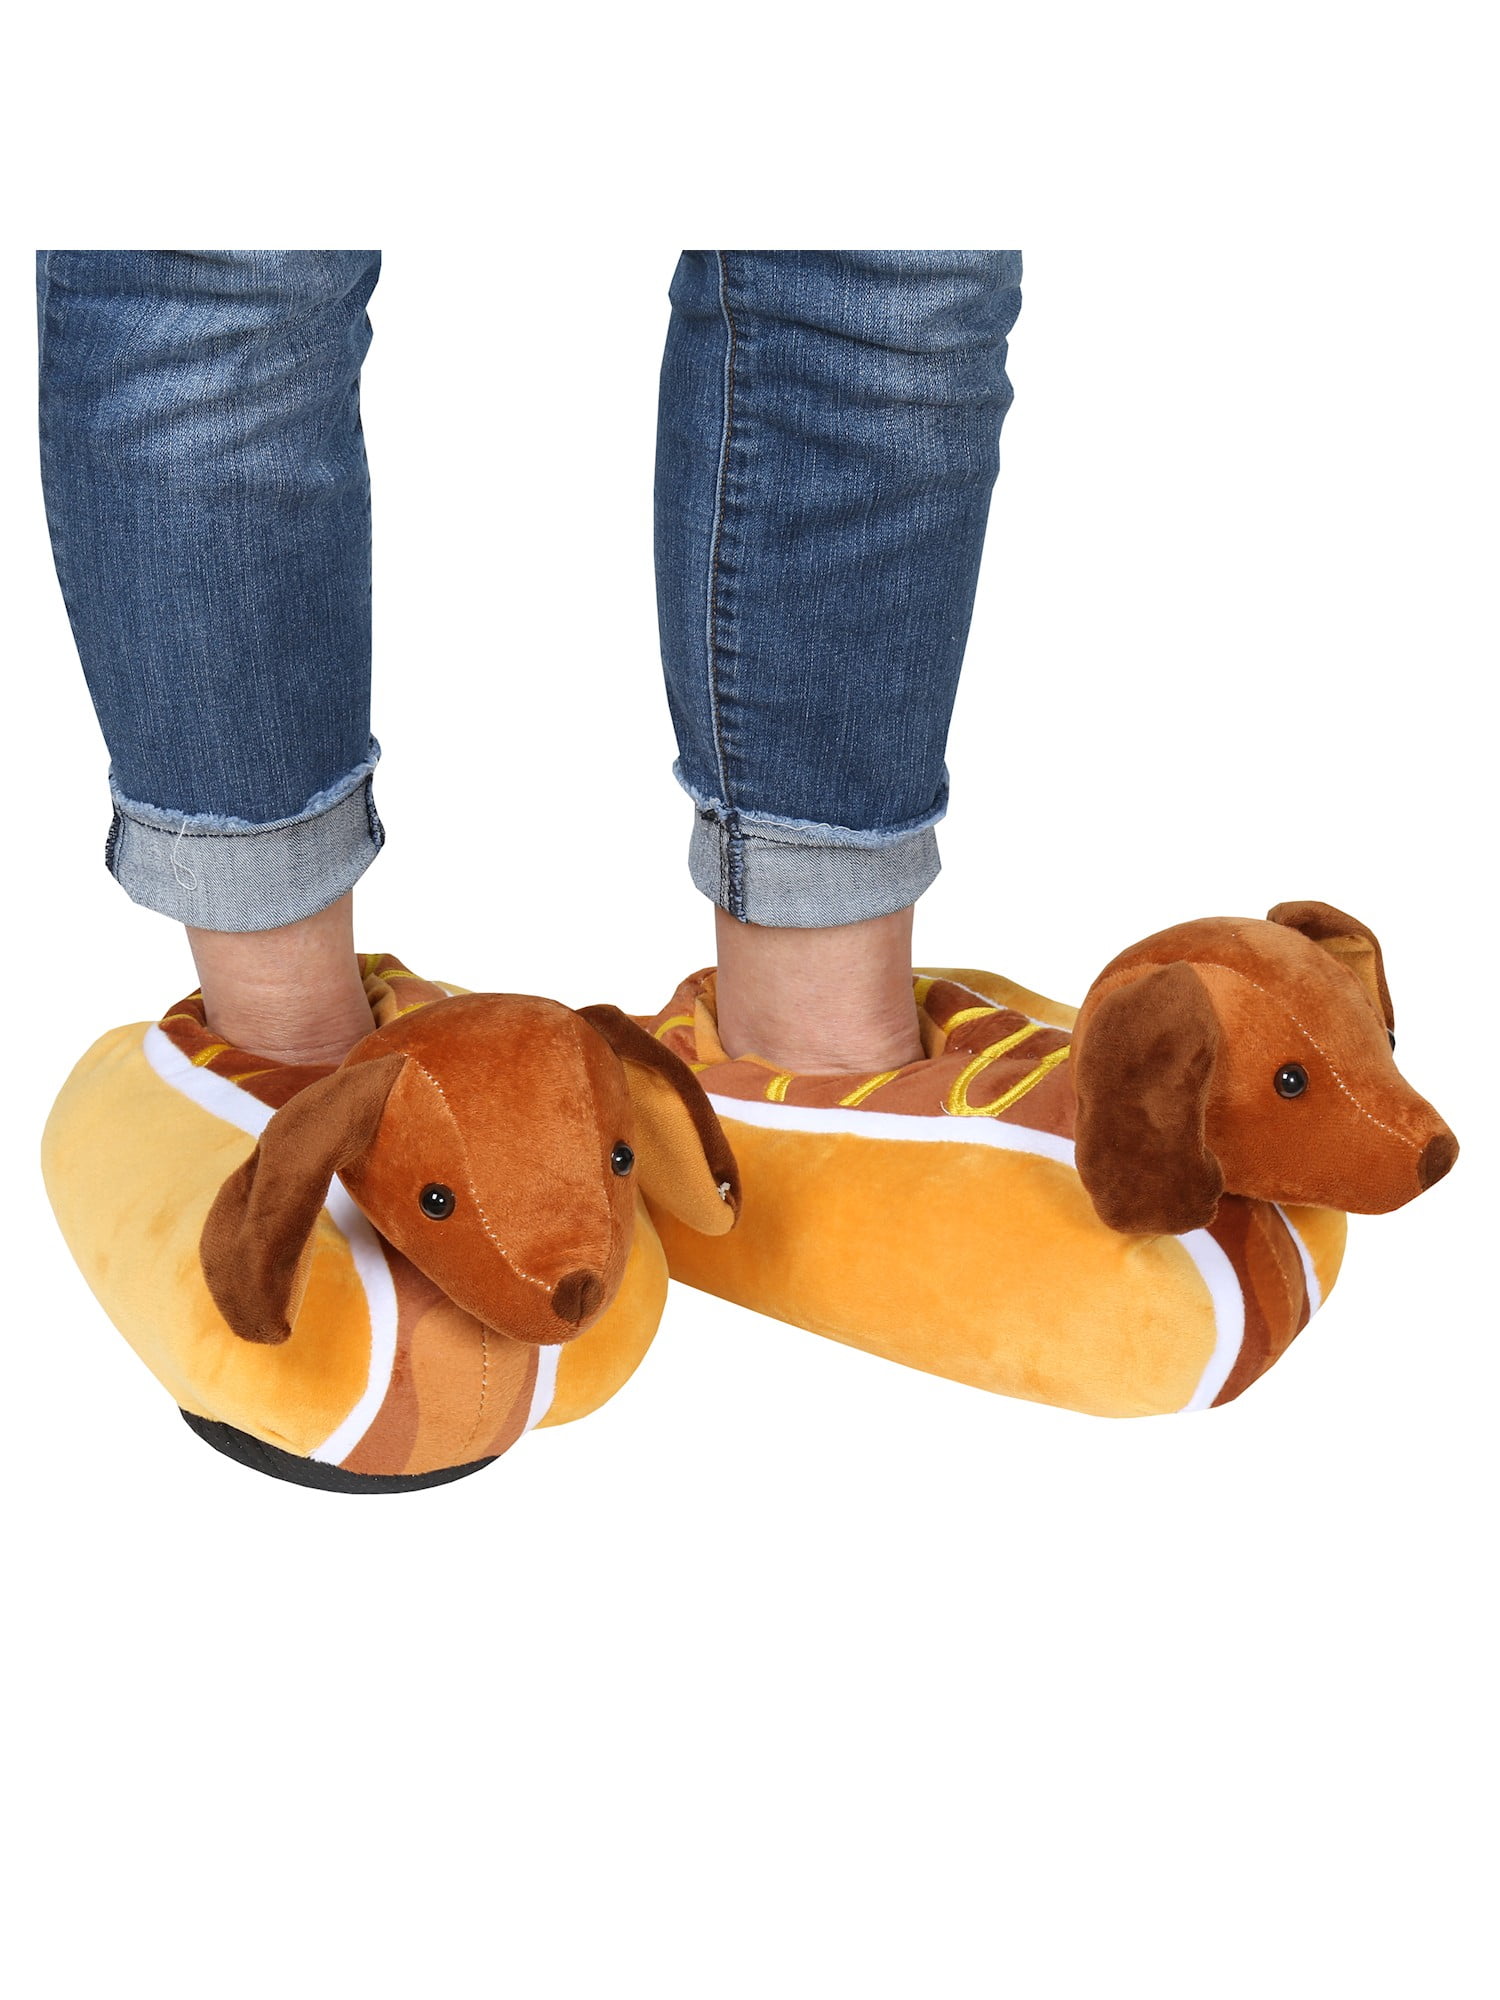 dachshund slippers walmart